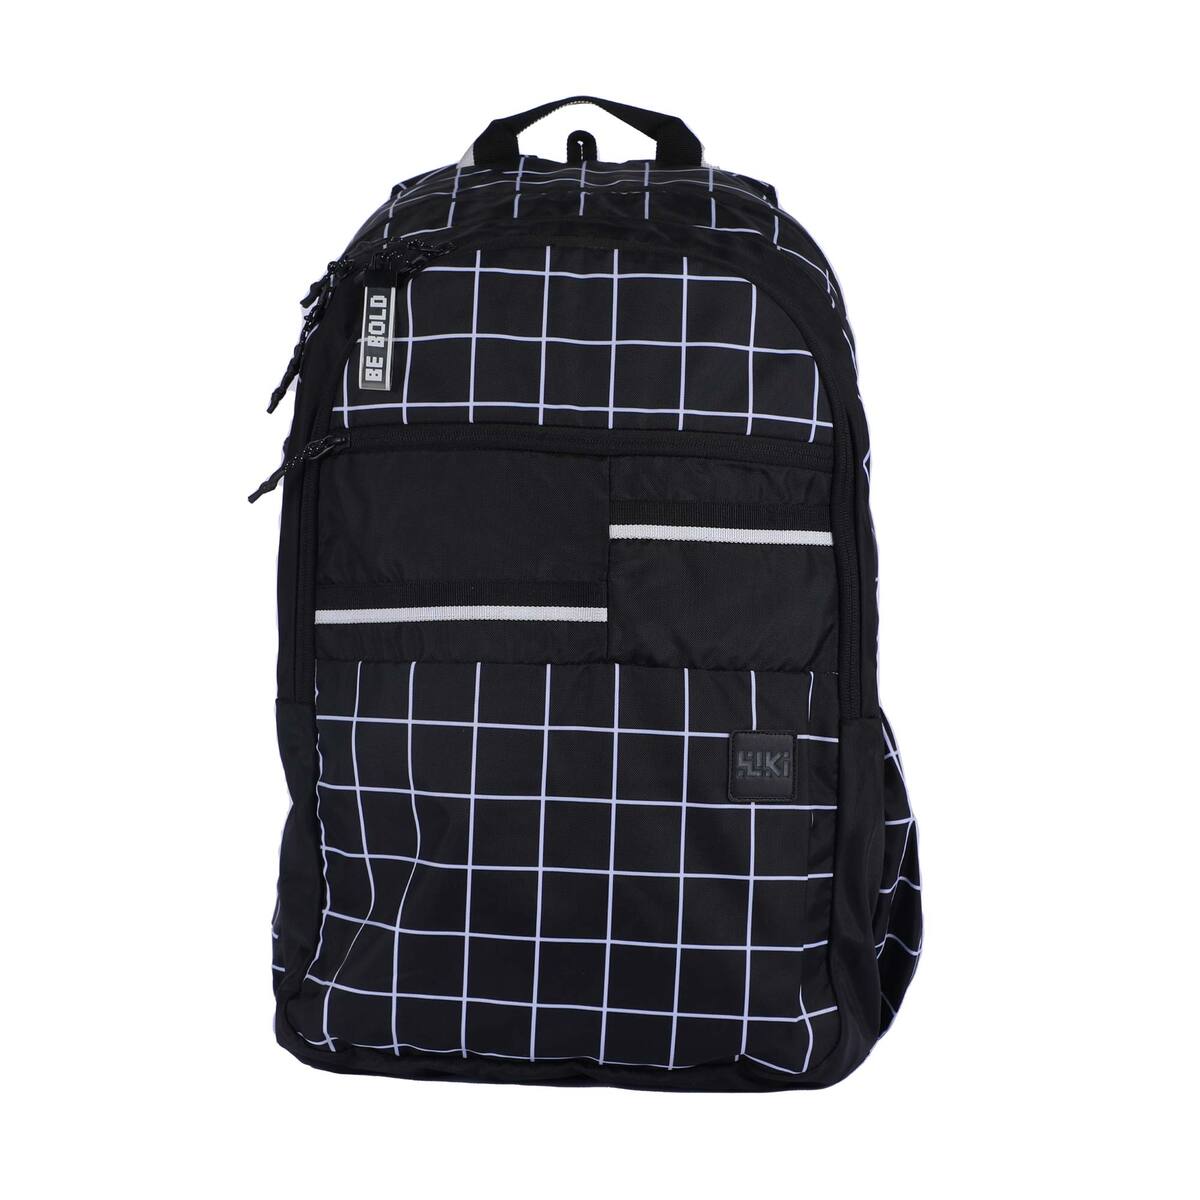 Wildcraft School Backpack 4Checks 19.5inch,Black